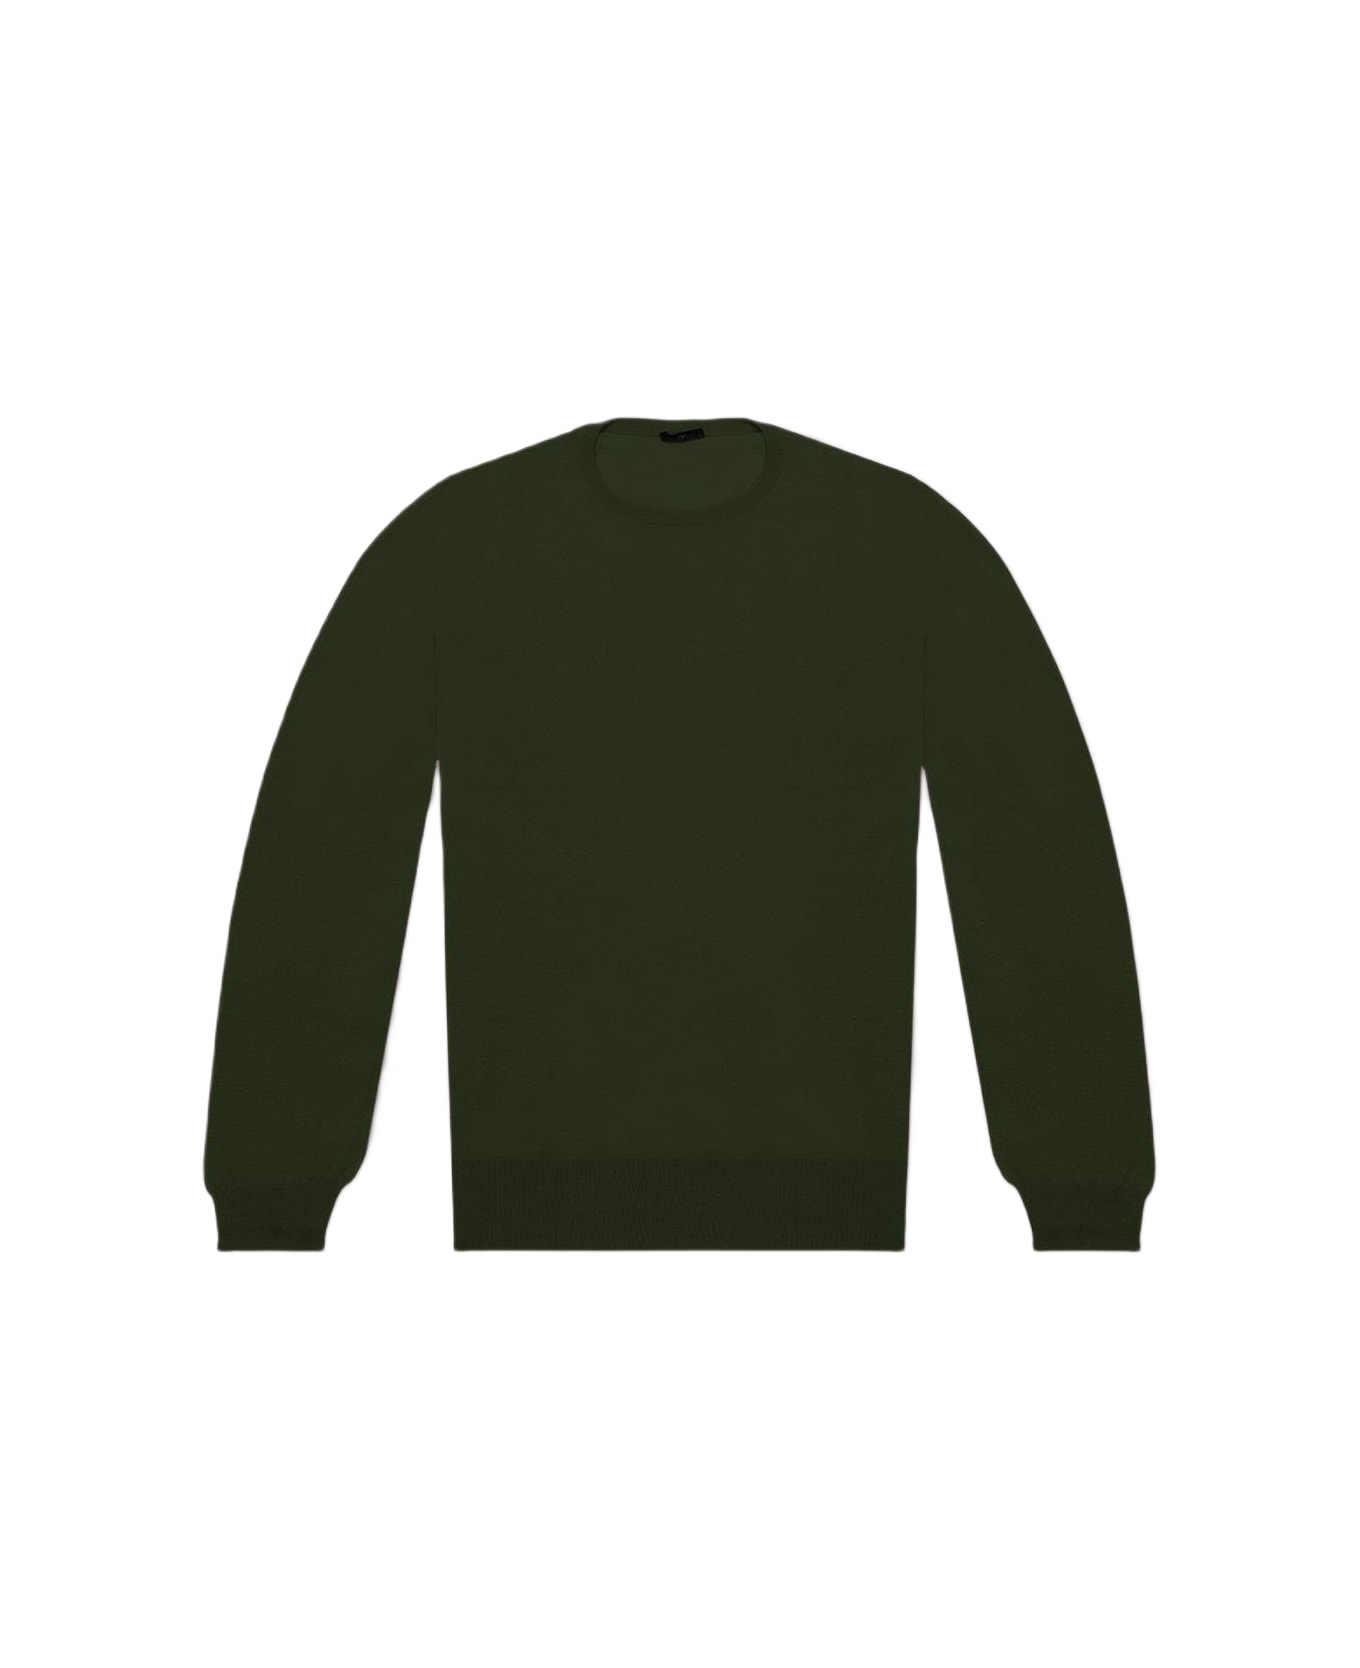 Larusmiani Crew Neck Irish Sweater - Olive フリース